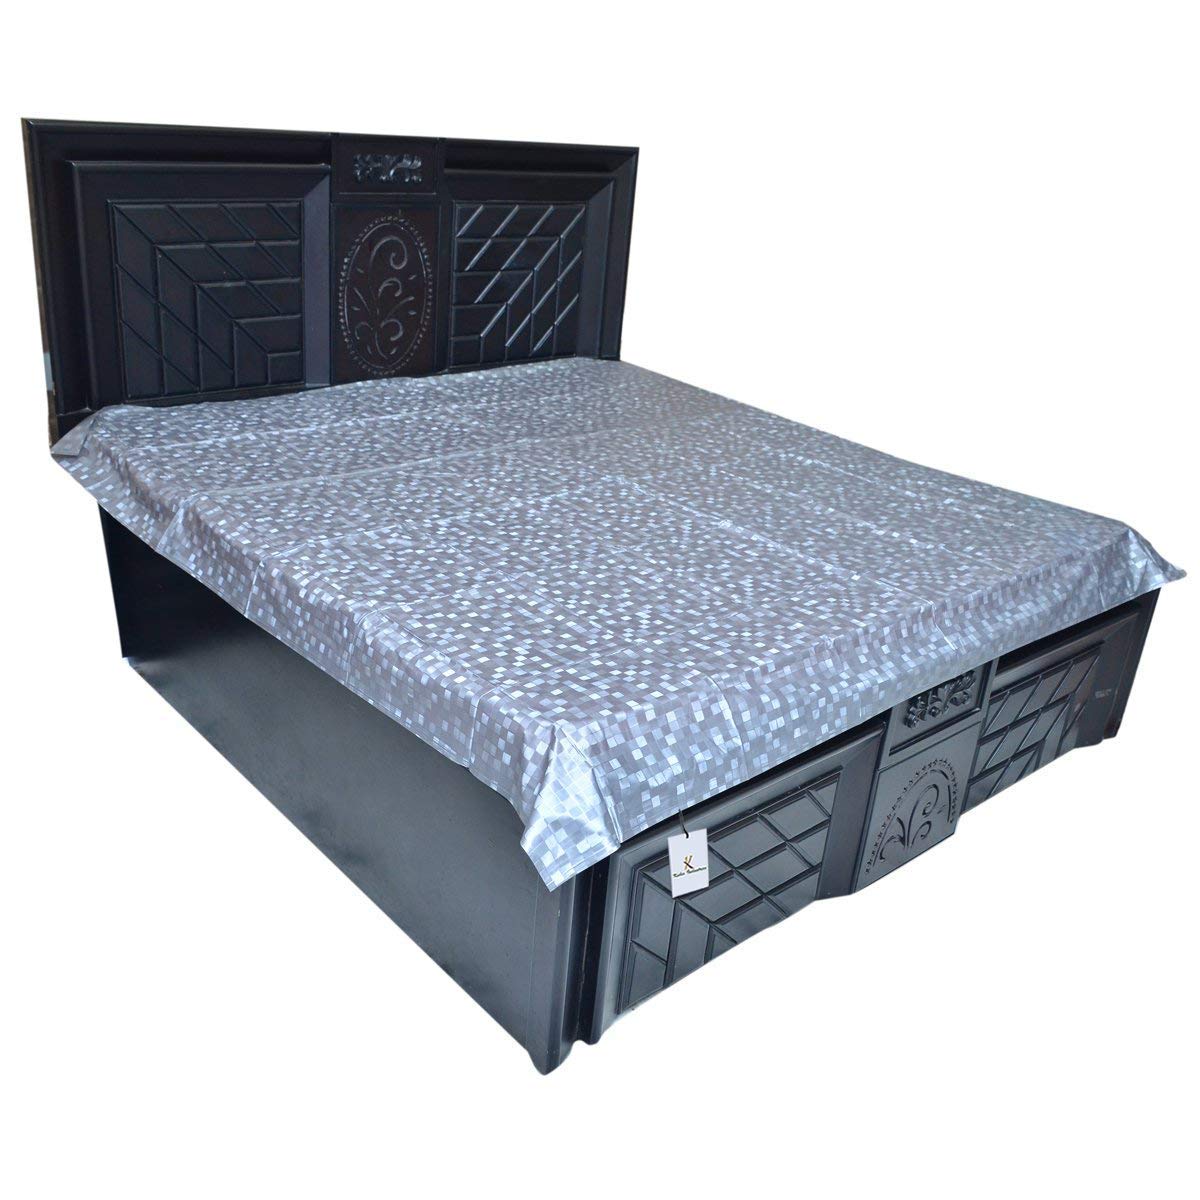 Kuber Industries PVC Double Bed Sheet, Grey, 6.5 * 6 Feet - Ctktc22301, Standard(Polyvinyl Chloride)